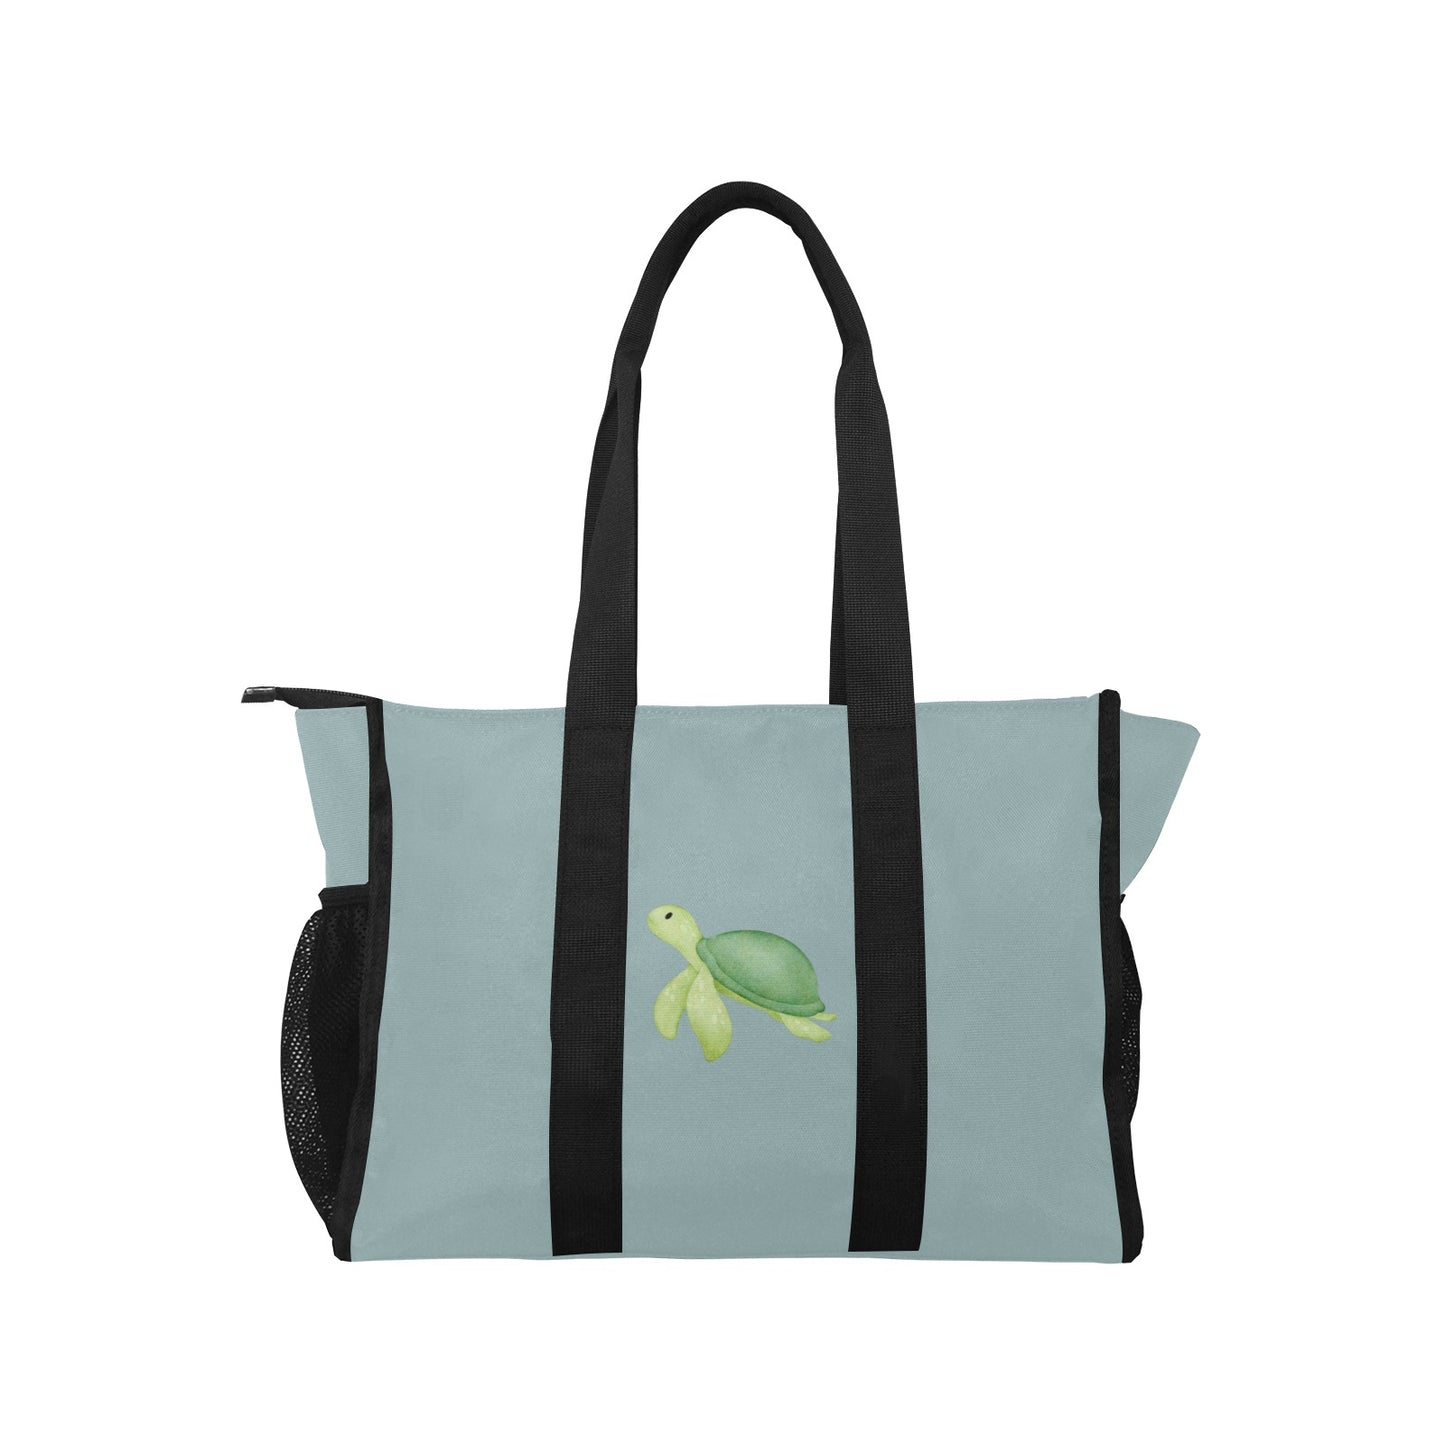 Customised & Personalised Travel Bag - Hospital to Baby Bag